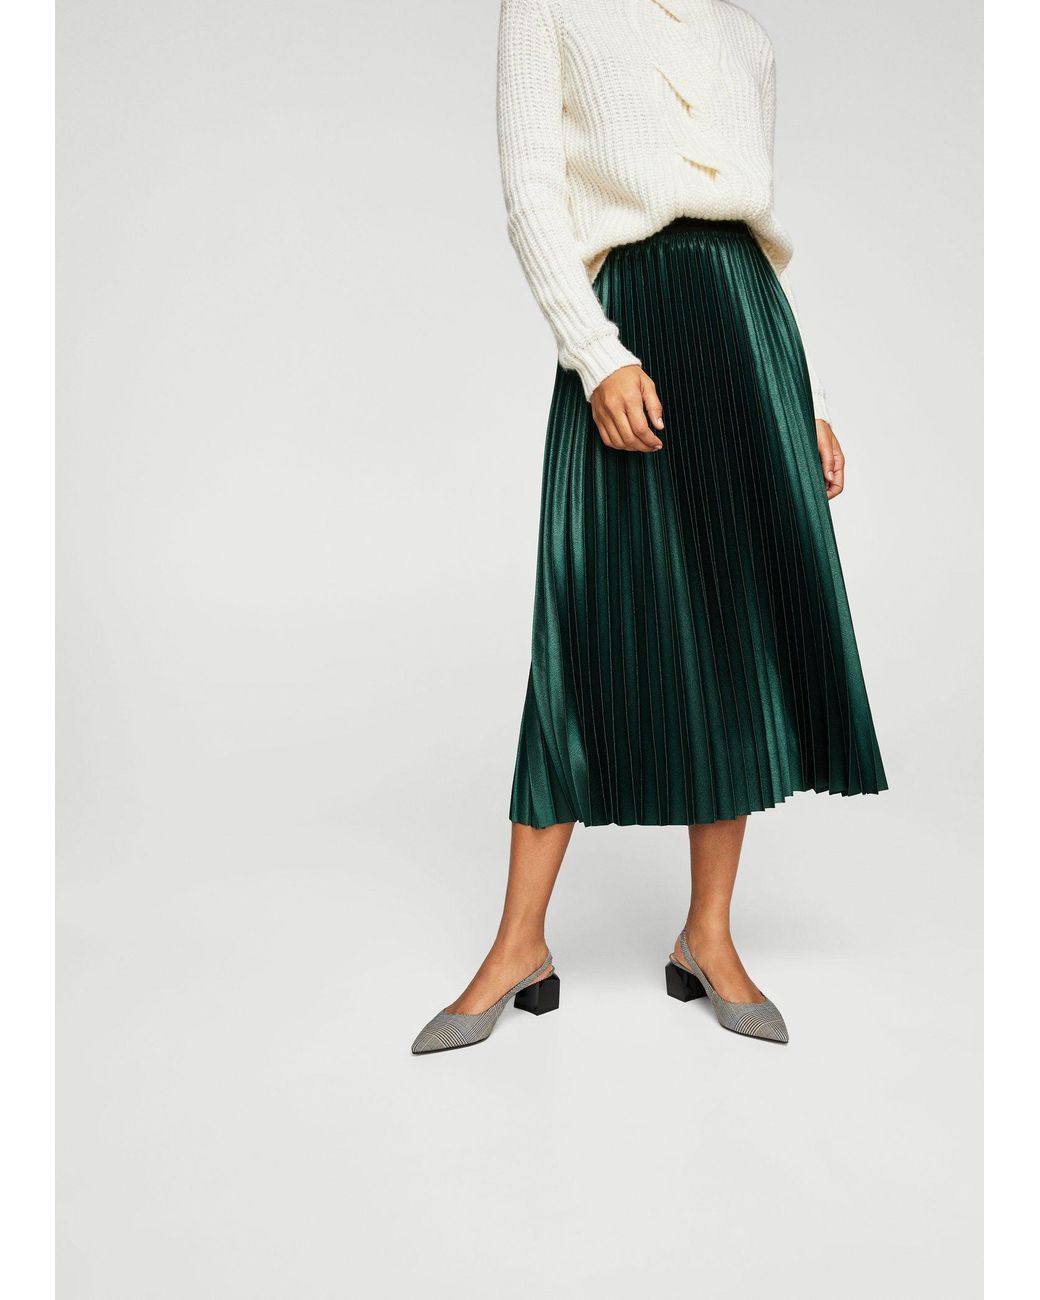 Mango Metallic Pleated Skirt in Green | Lyst UK